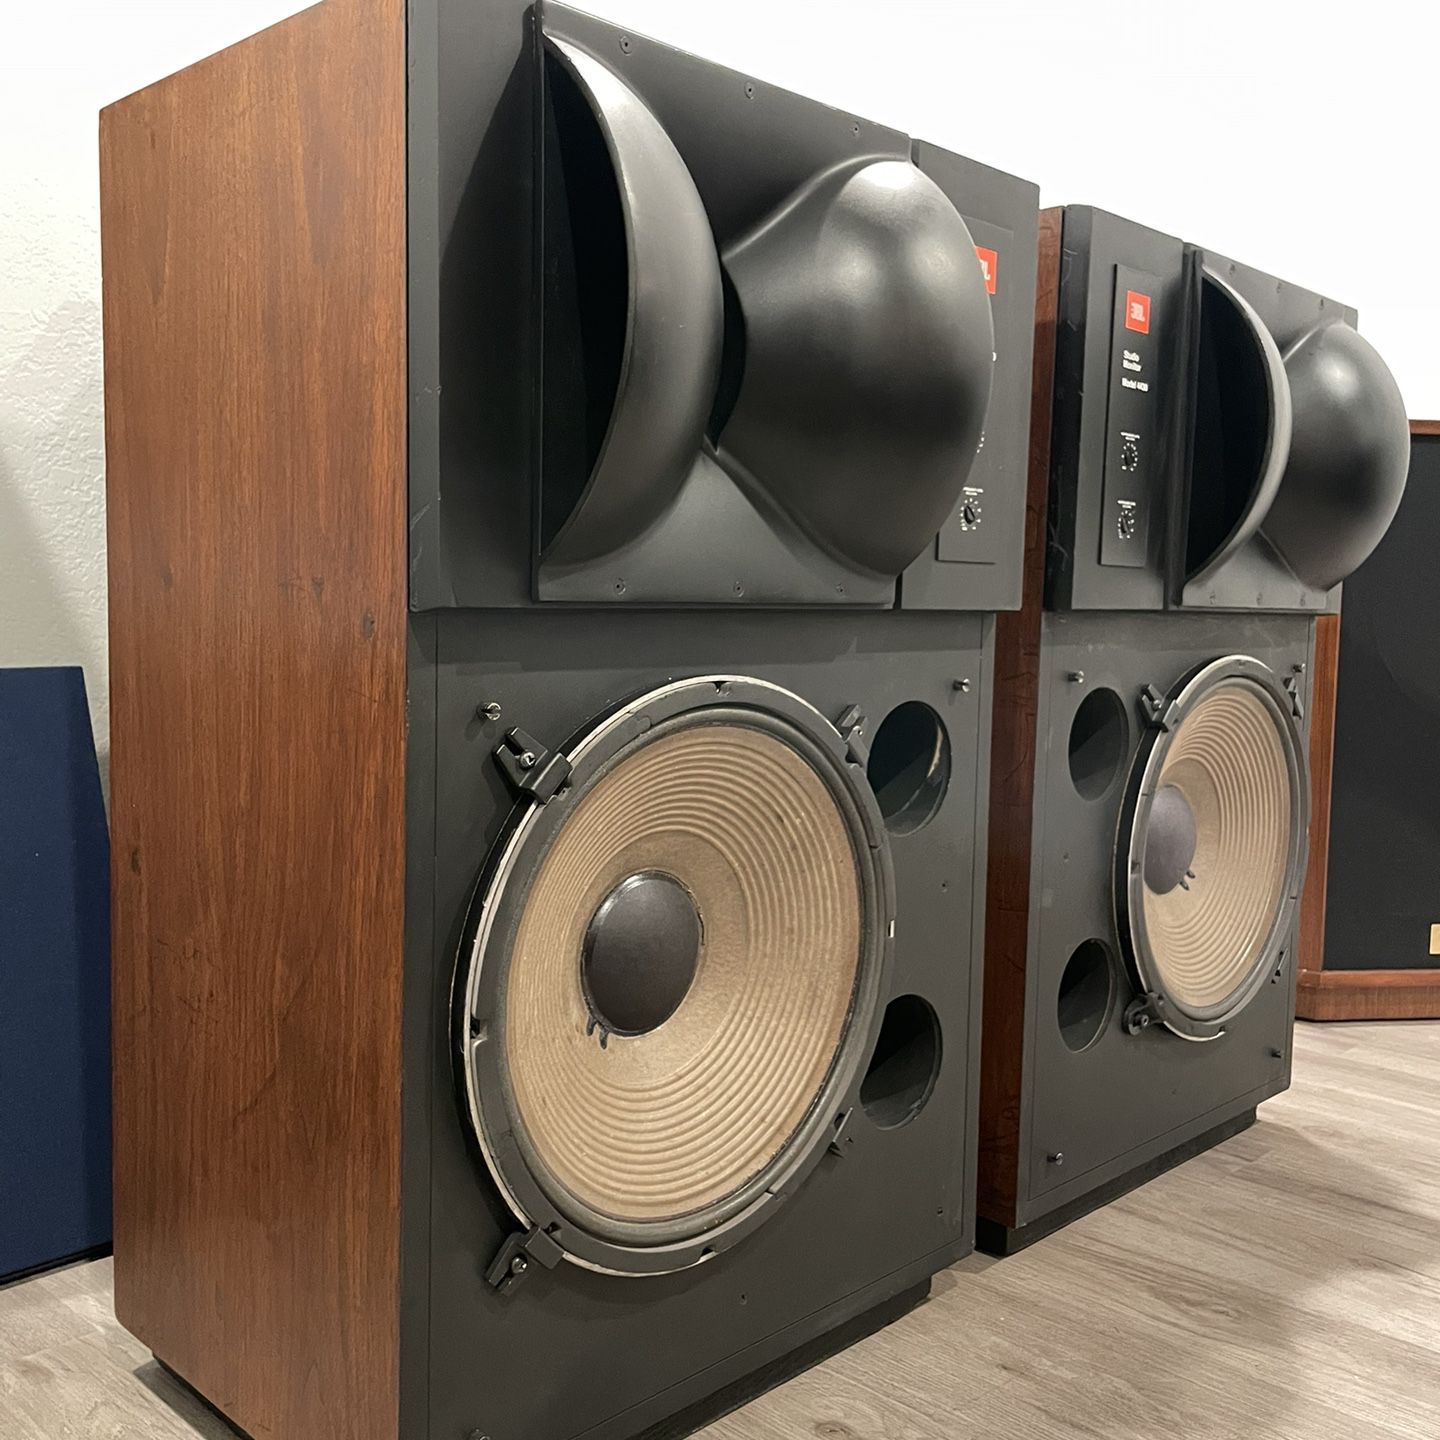 Jbl 4430 Full Studio Monitors Floor Standing Speakers for Sale West Covina, CA - OfferUp